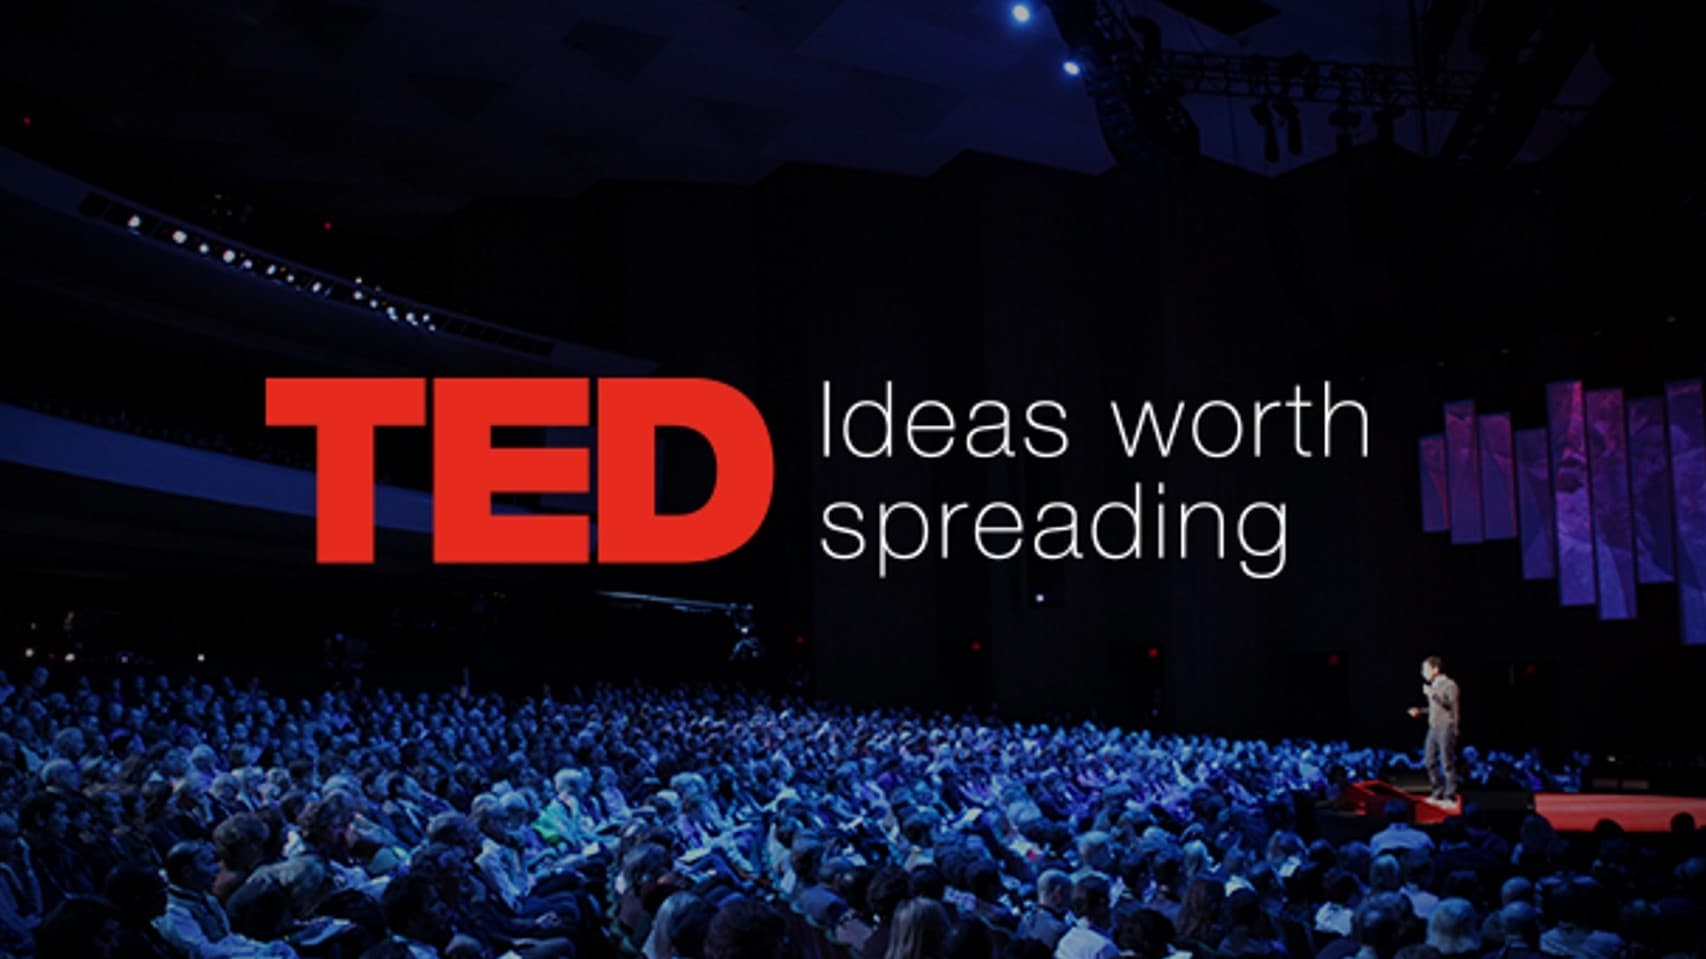 TED logo with tagline "ideas worth spreading